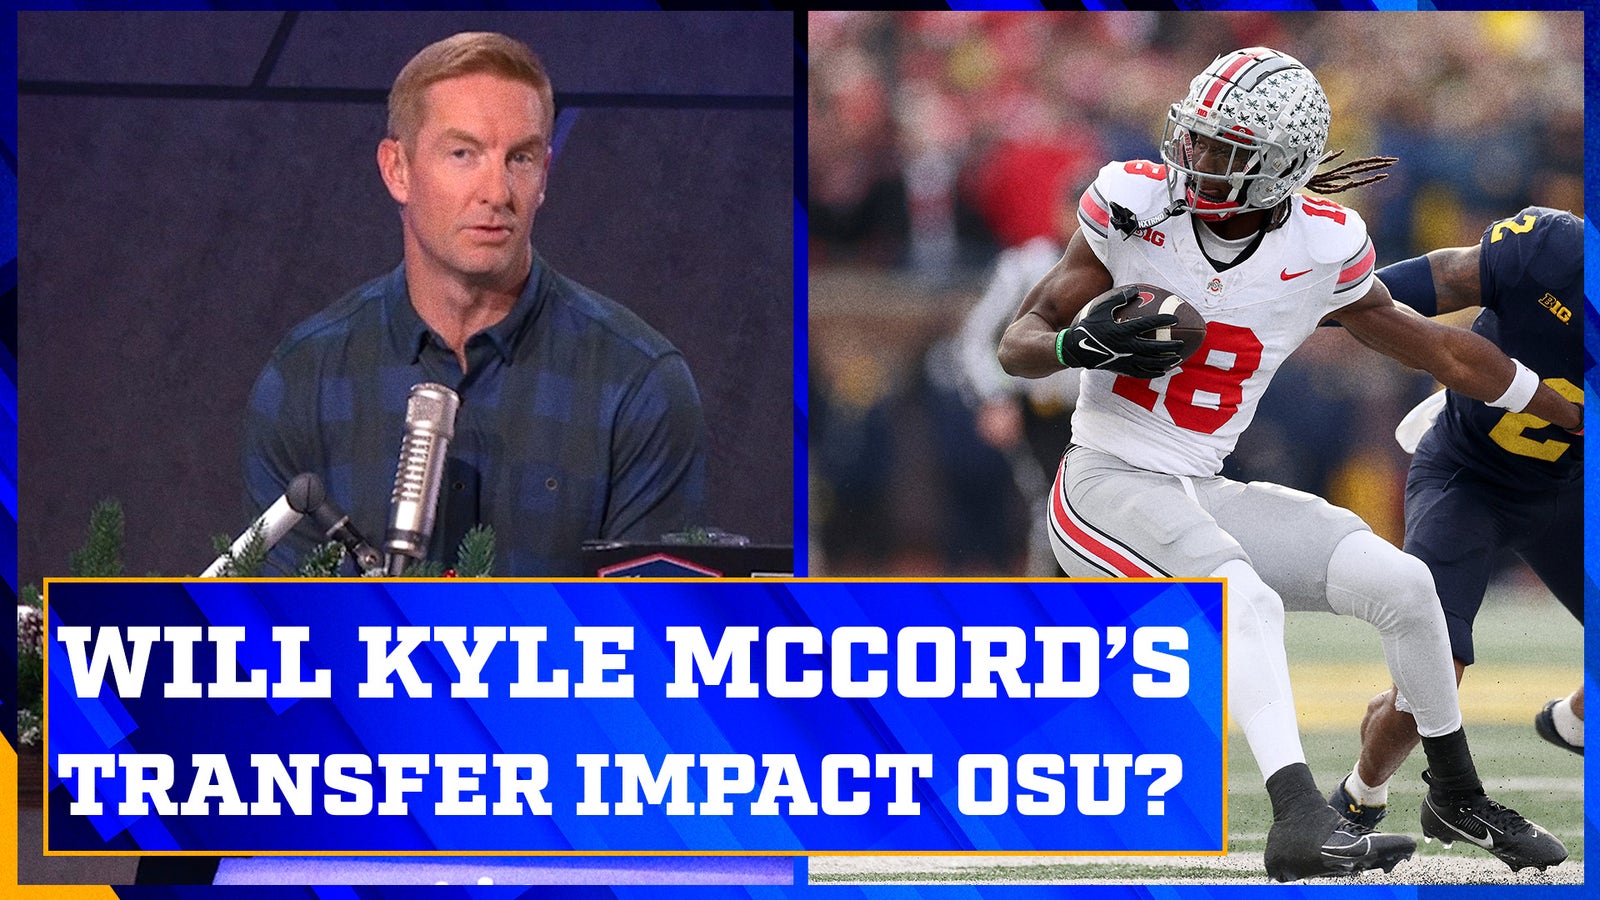 Will Kyle McCord’s transfer impact Ohio State greatly vs. Missouri? | Joel Klatt Show